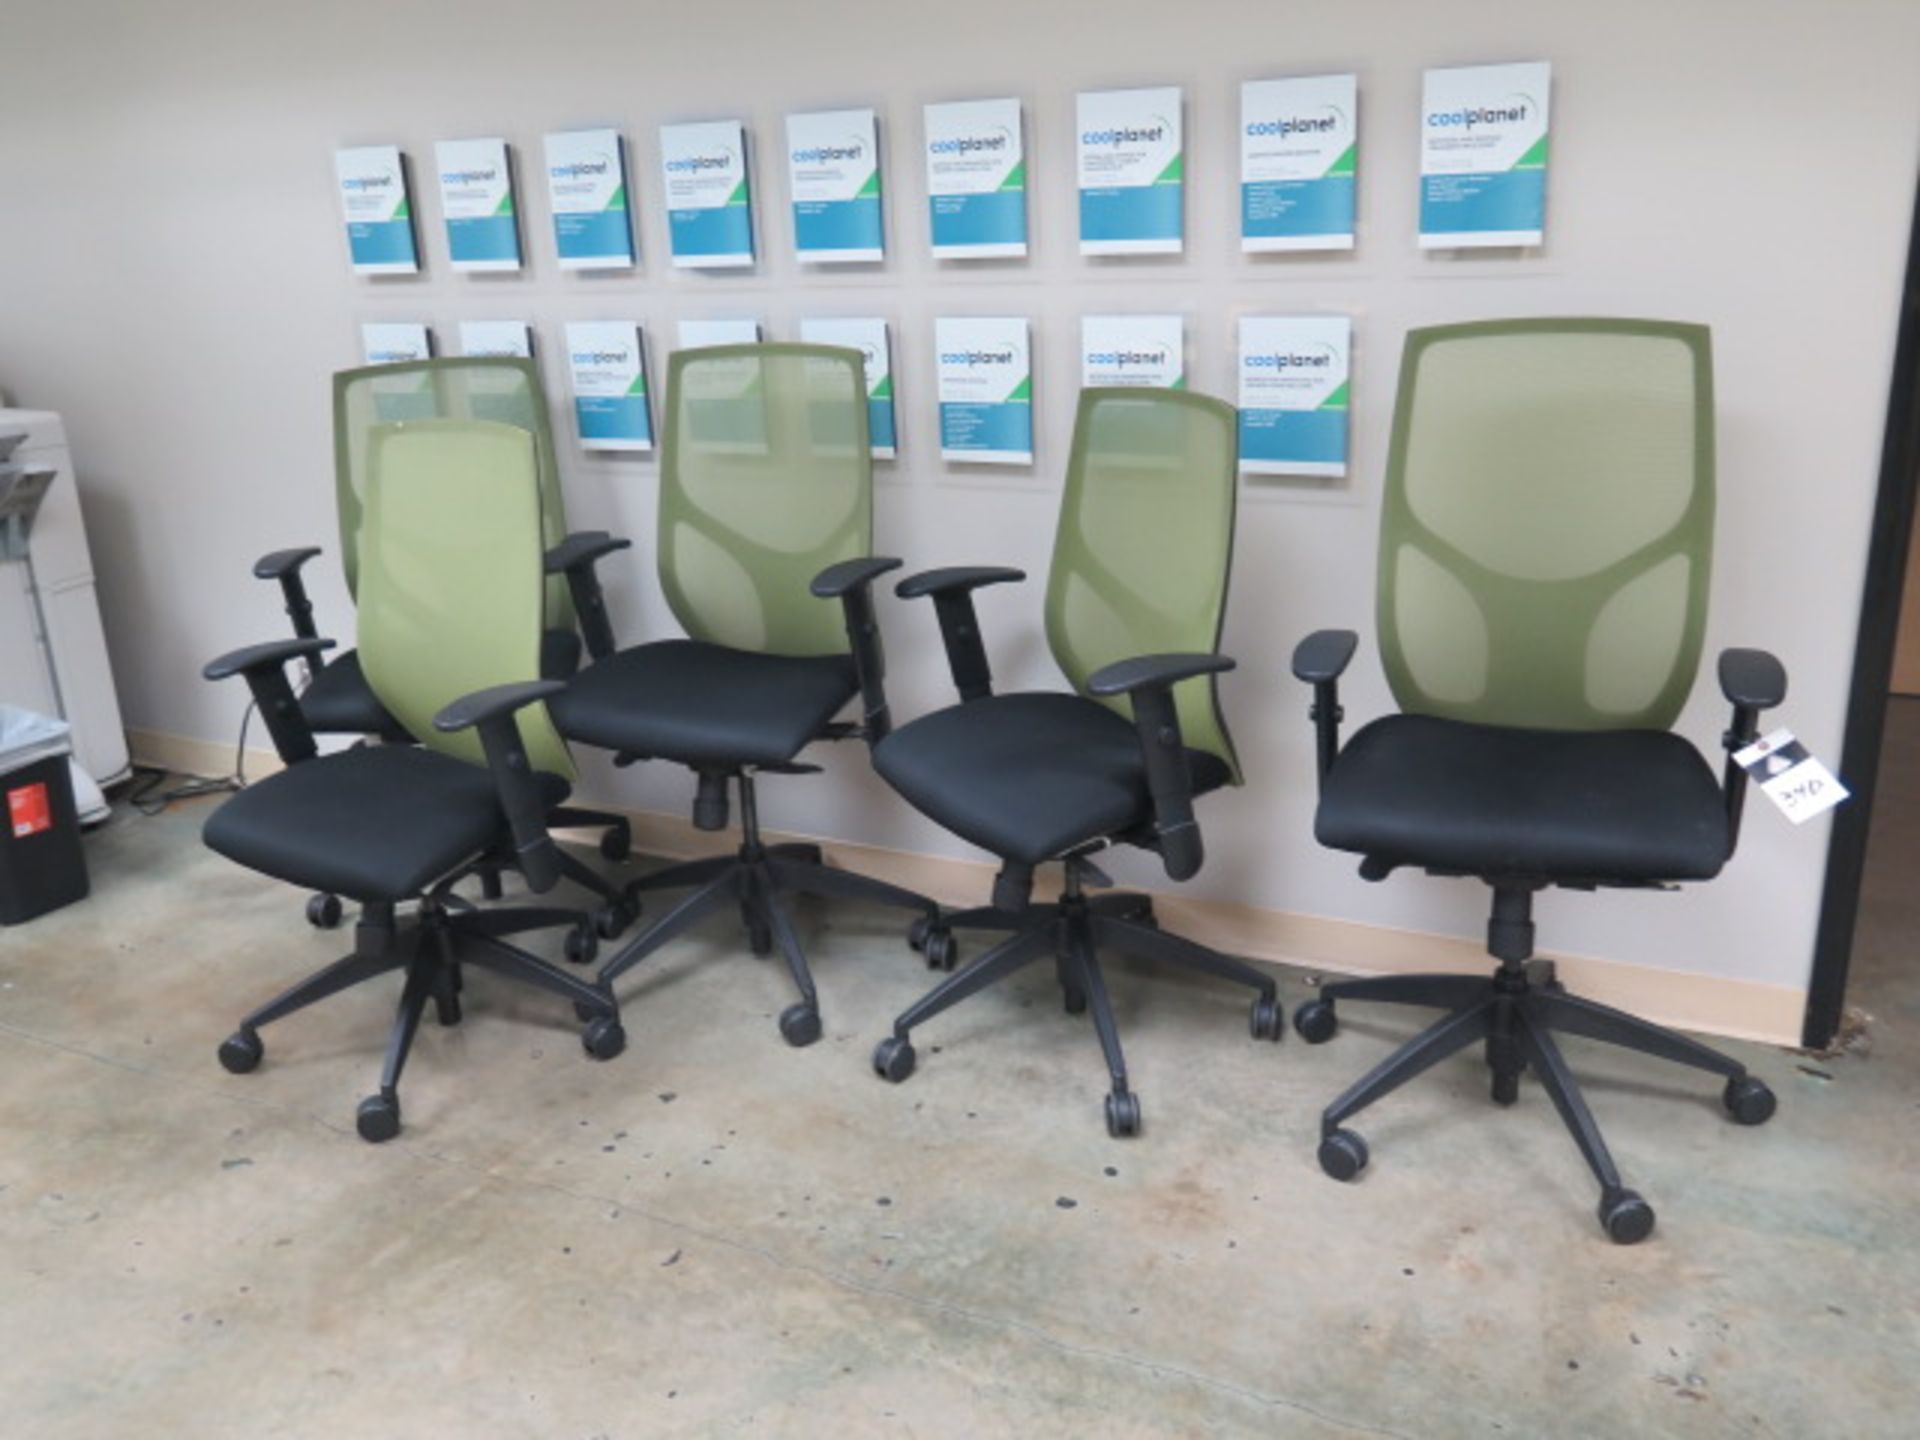 Ergonomic Office Chairs (7 - Green)